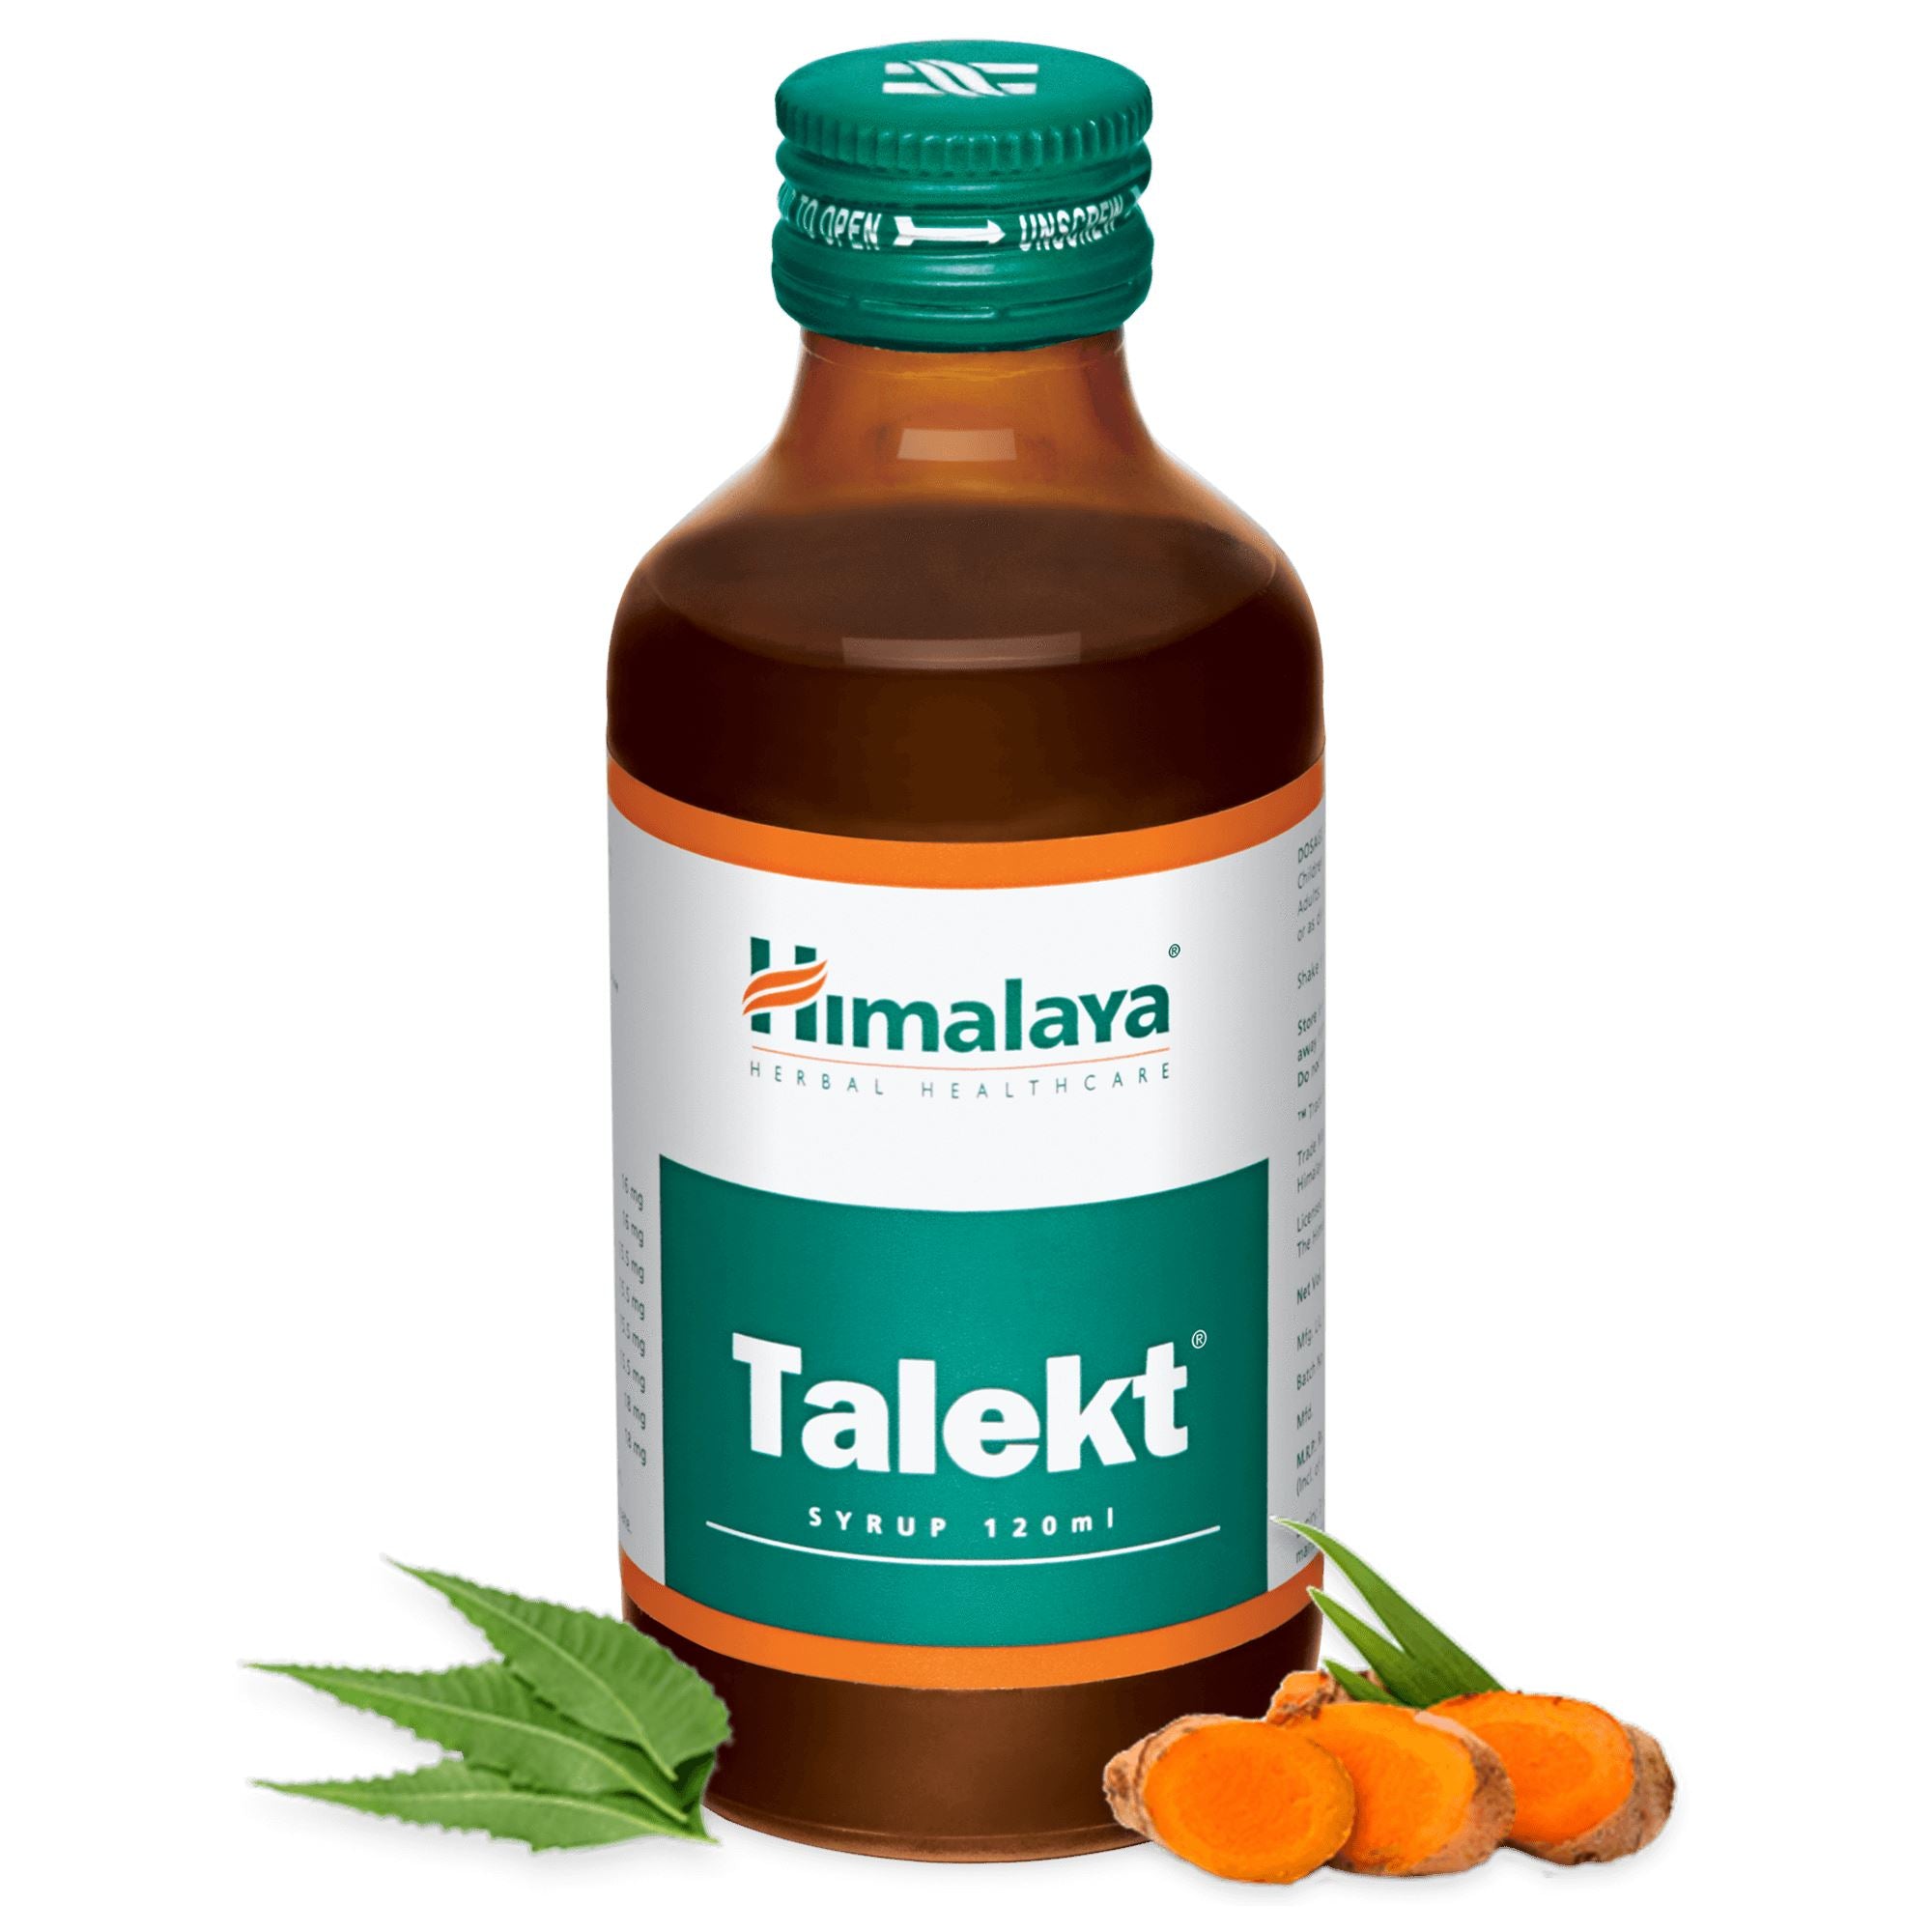 Himalaya Talekt Syrup - Effective against skin disorders